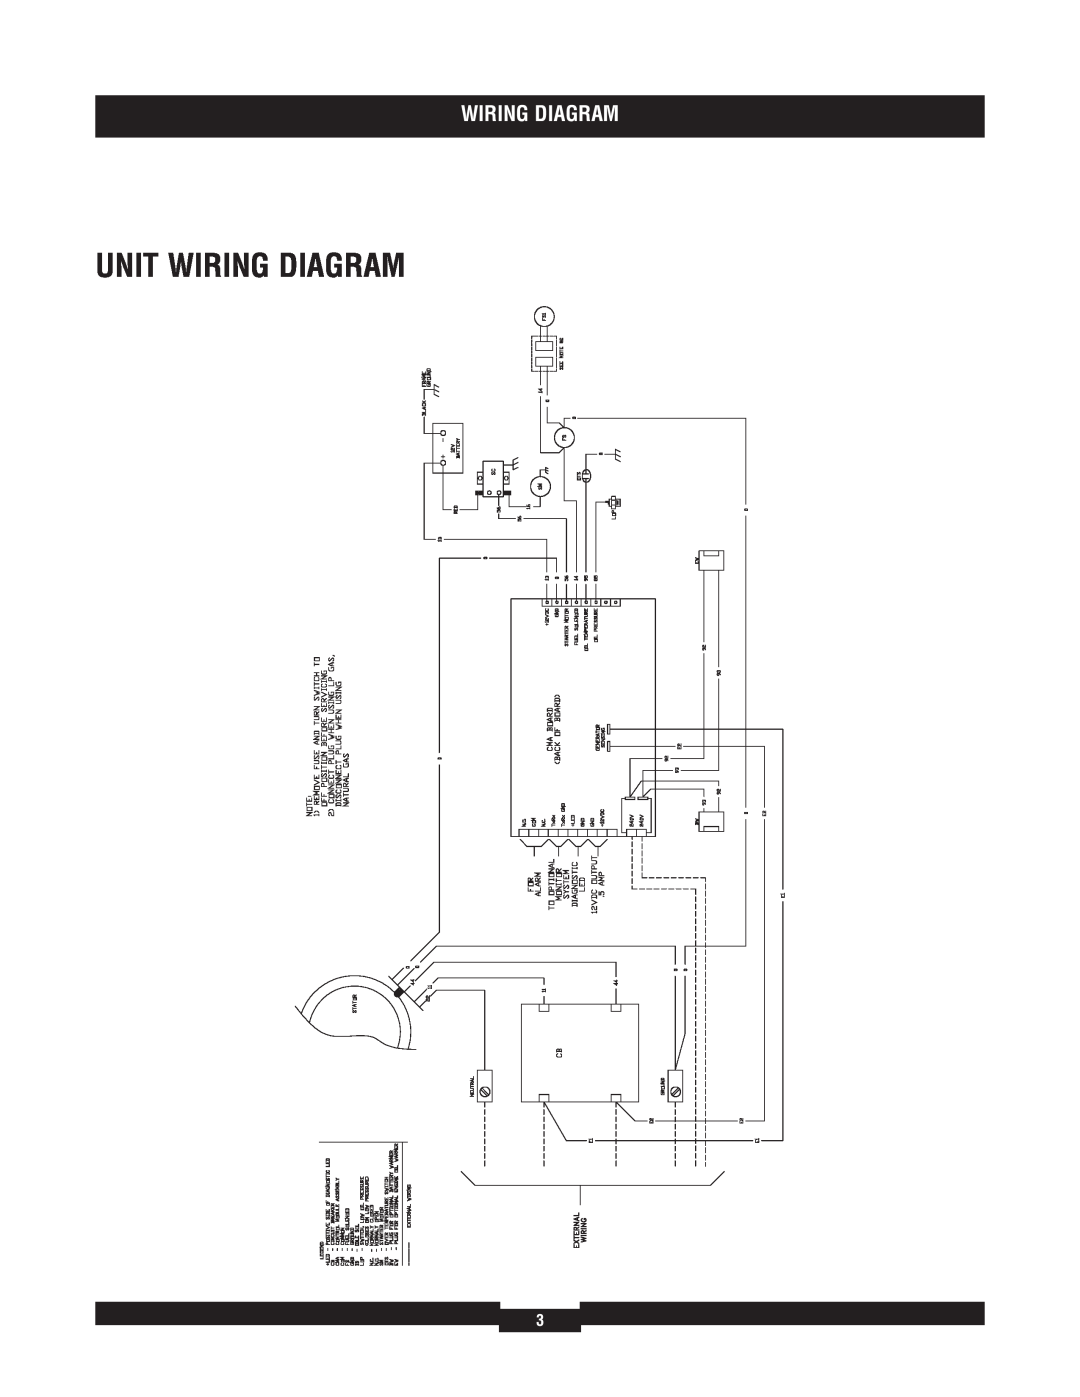 Briggs & Stratton 040212-1 manual Unit Wiring Diagram 